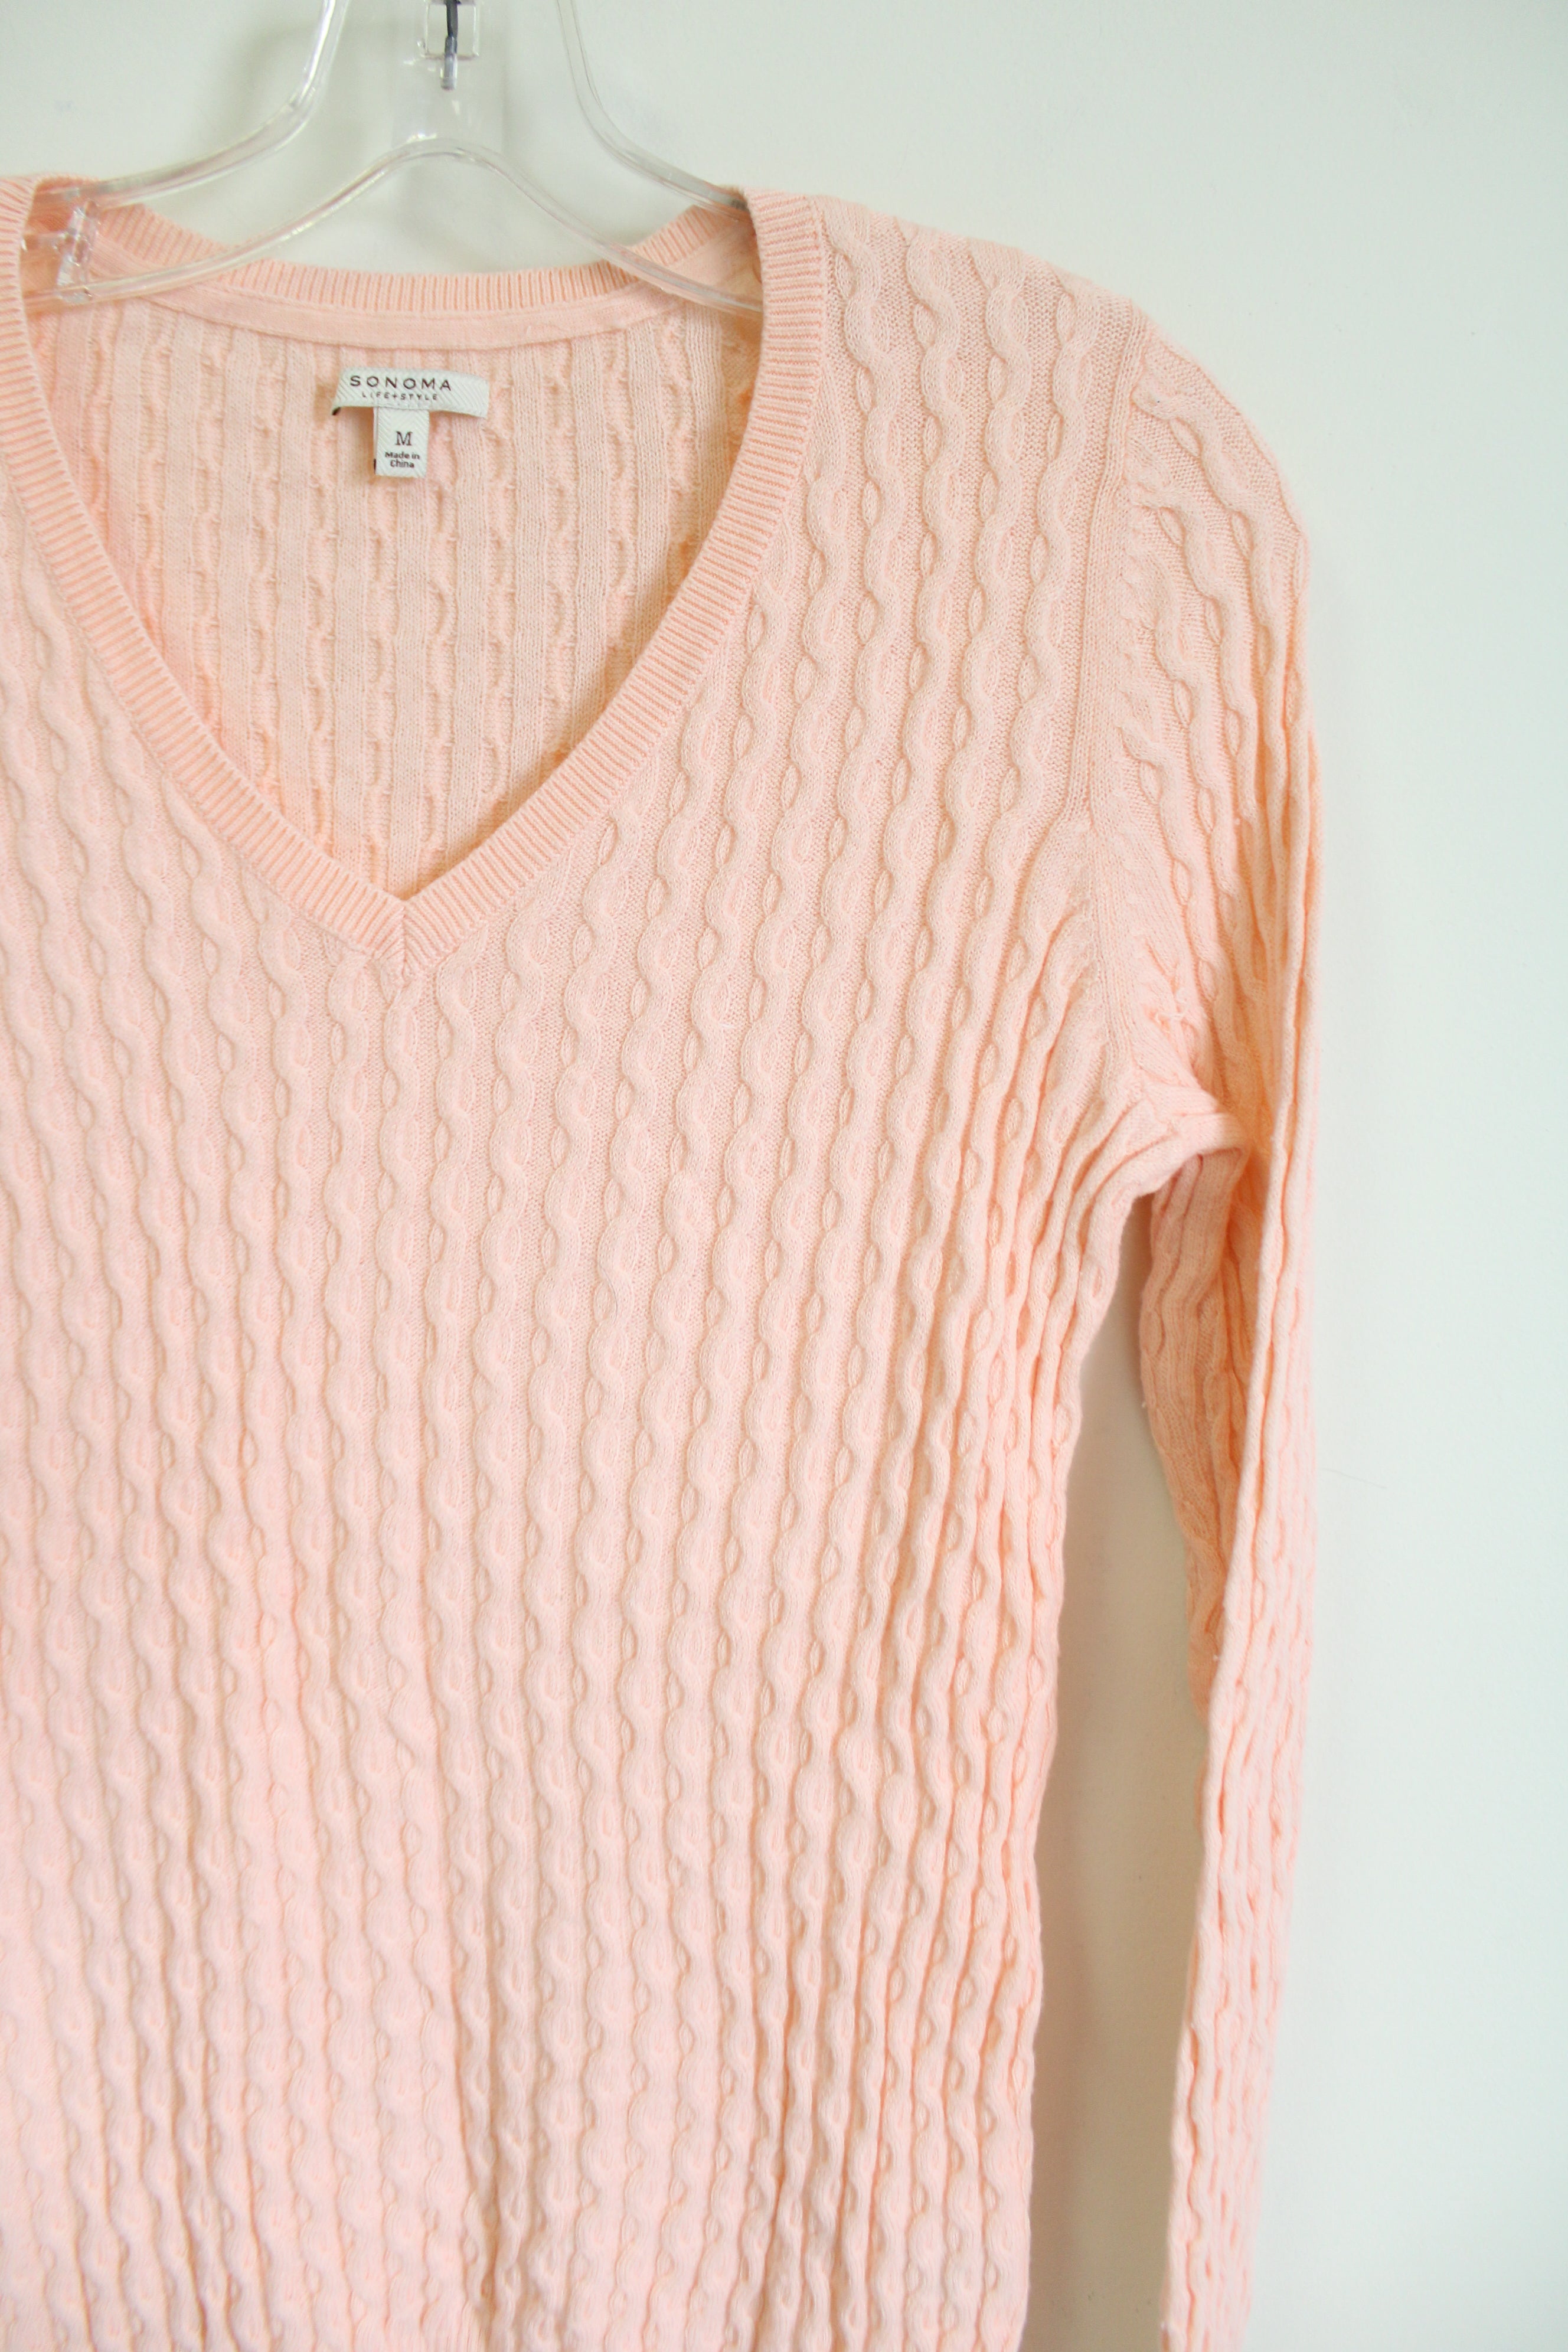 Sonoma Pink Knit Sweater | M